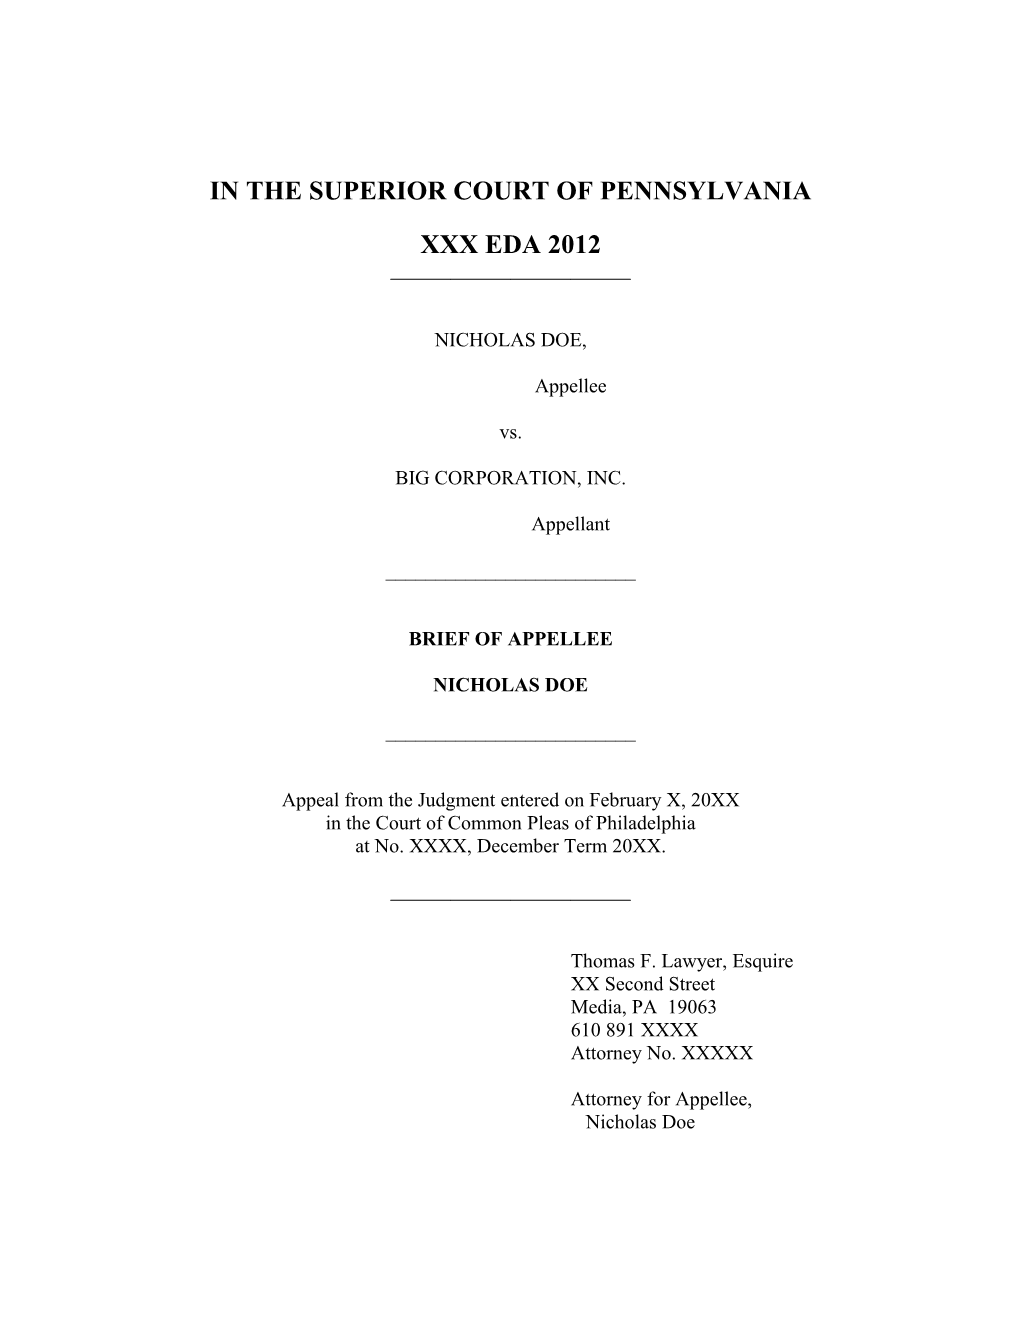 In the Superior Court of Pennsylvania